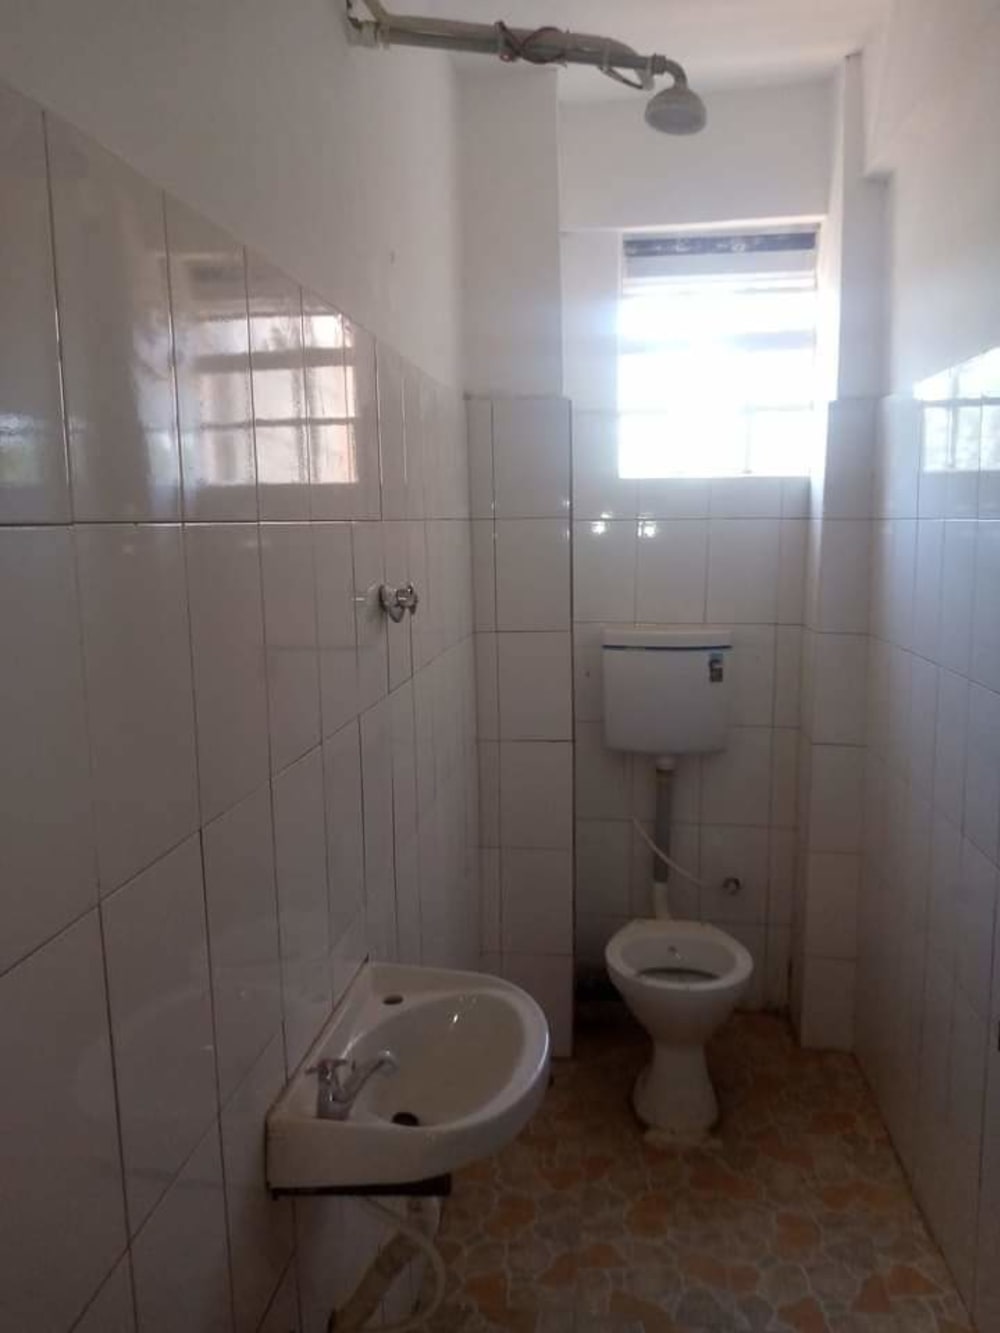 2 bedroom Apartment for rent in Malava inn, Lurambi